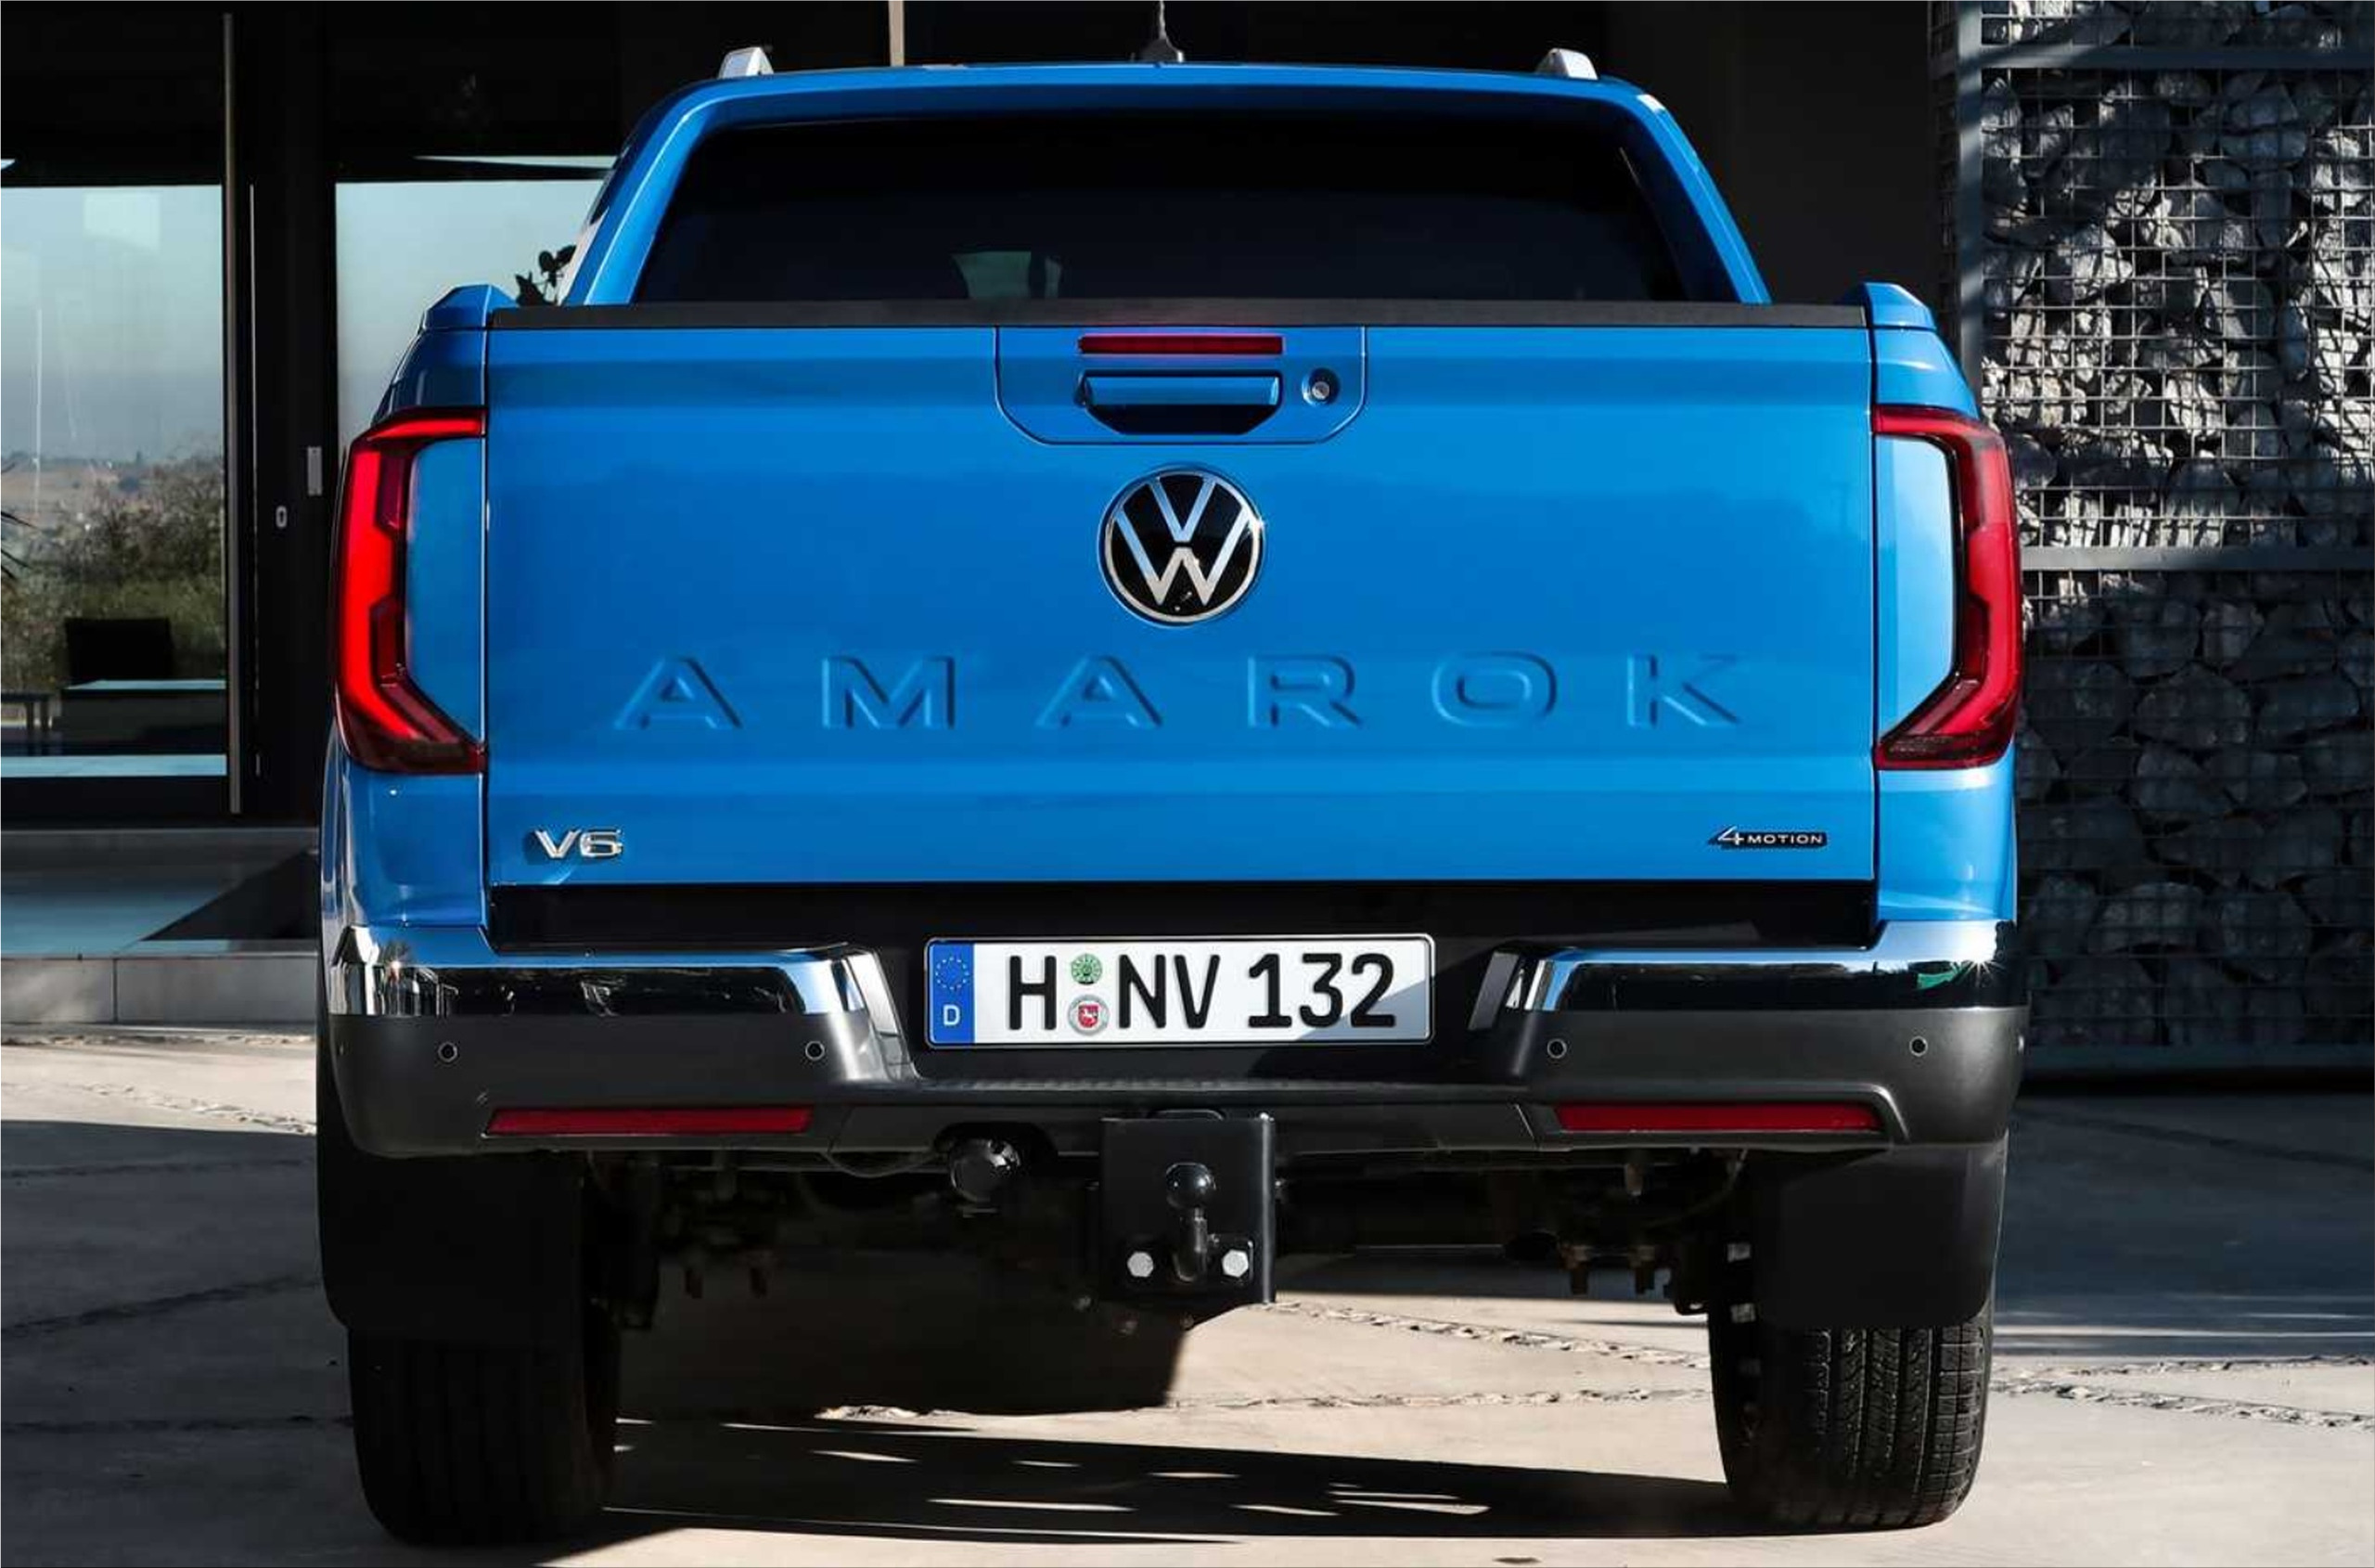 The Volkswagen Amarok's second generation has just been unveiled